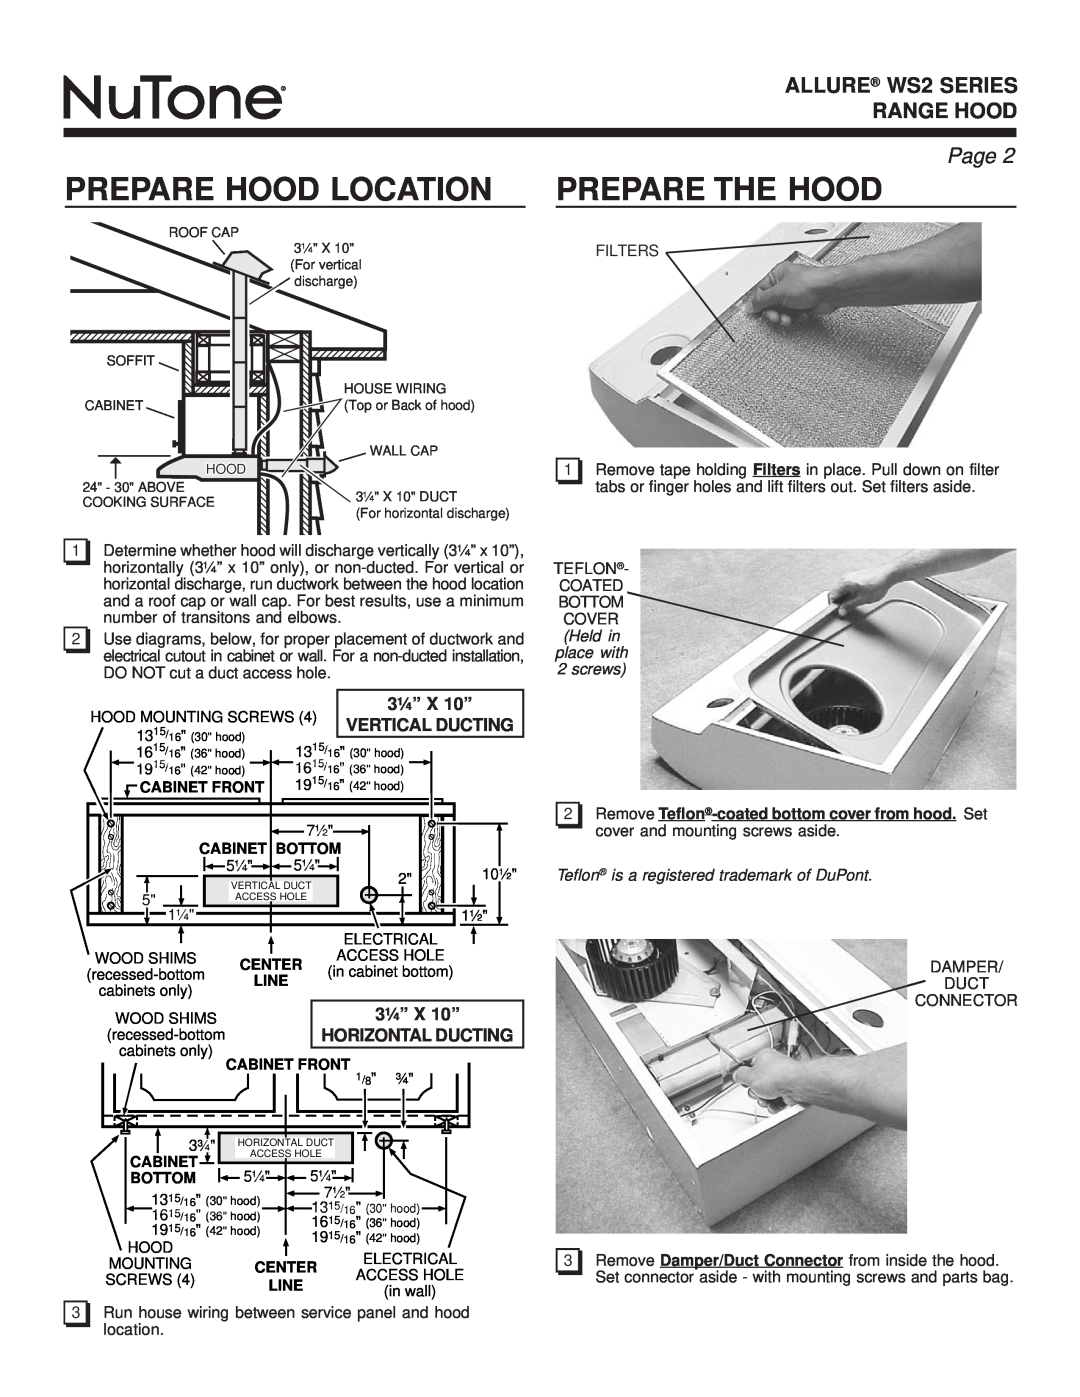 NuTone Prepare Hood Location, Prepare The Hood, ALLURE WS2 SERIES RANGE HOOD, Page, 3¼” X 10”, Vertical Ducting, Center 